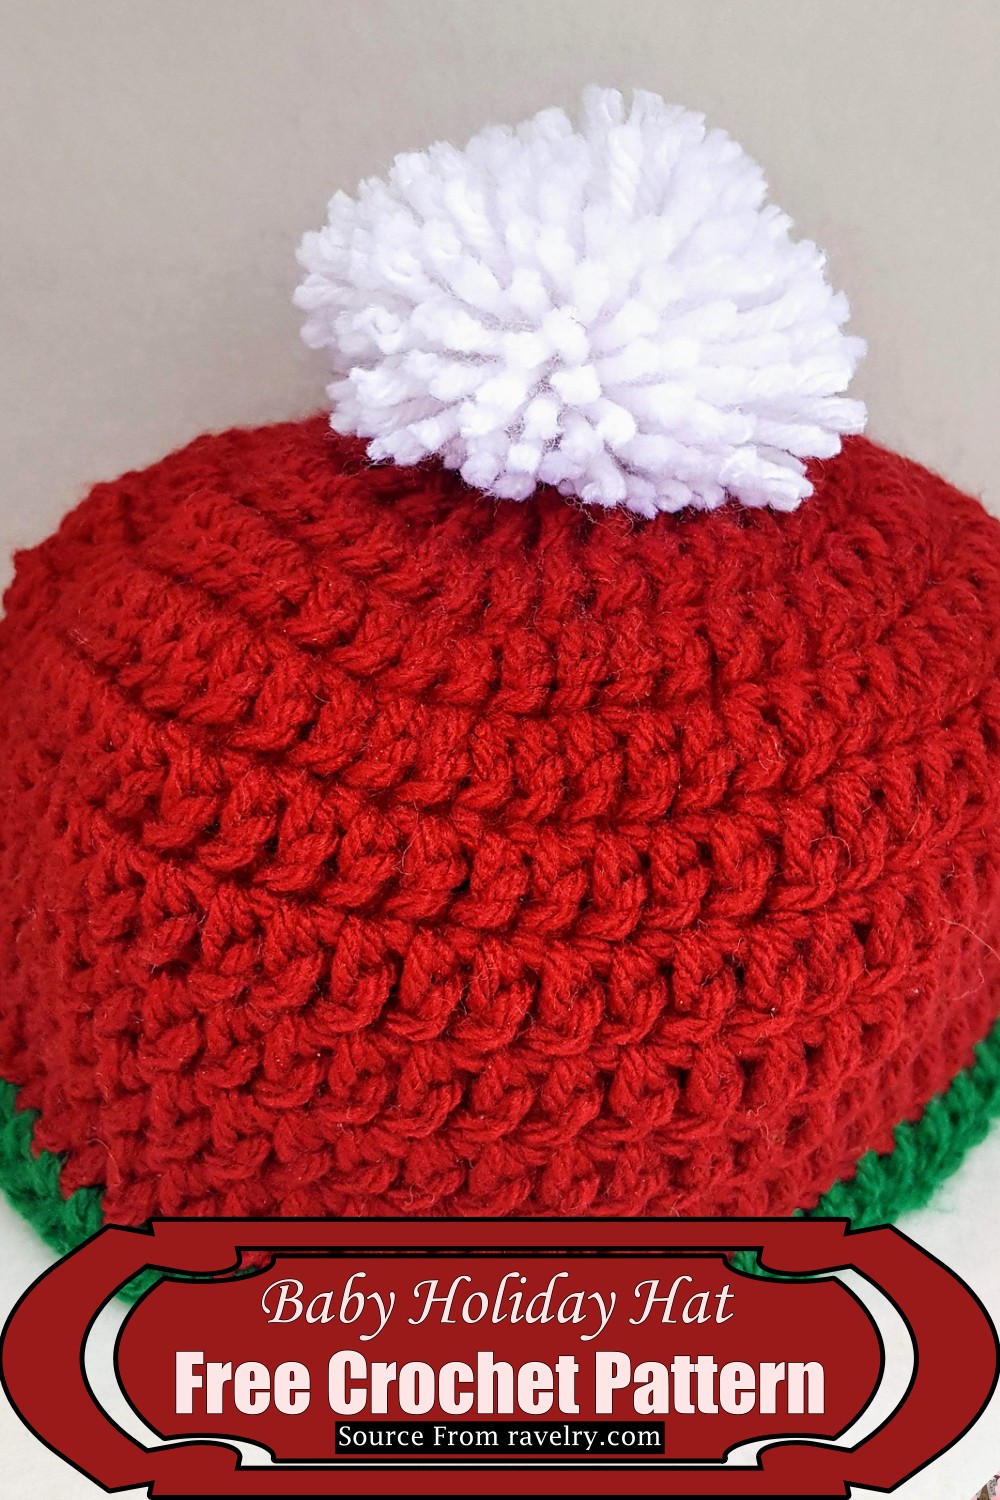 Crochet Baby Holiday Hat Pattern